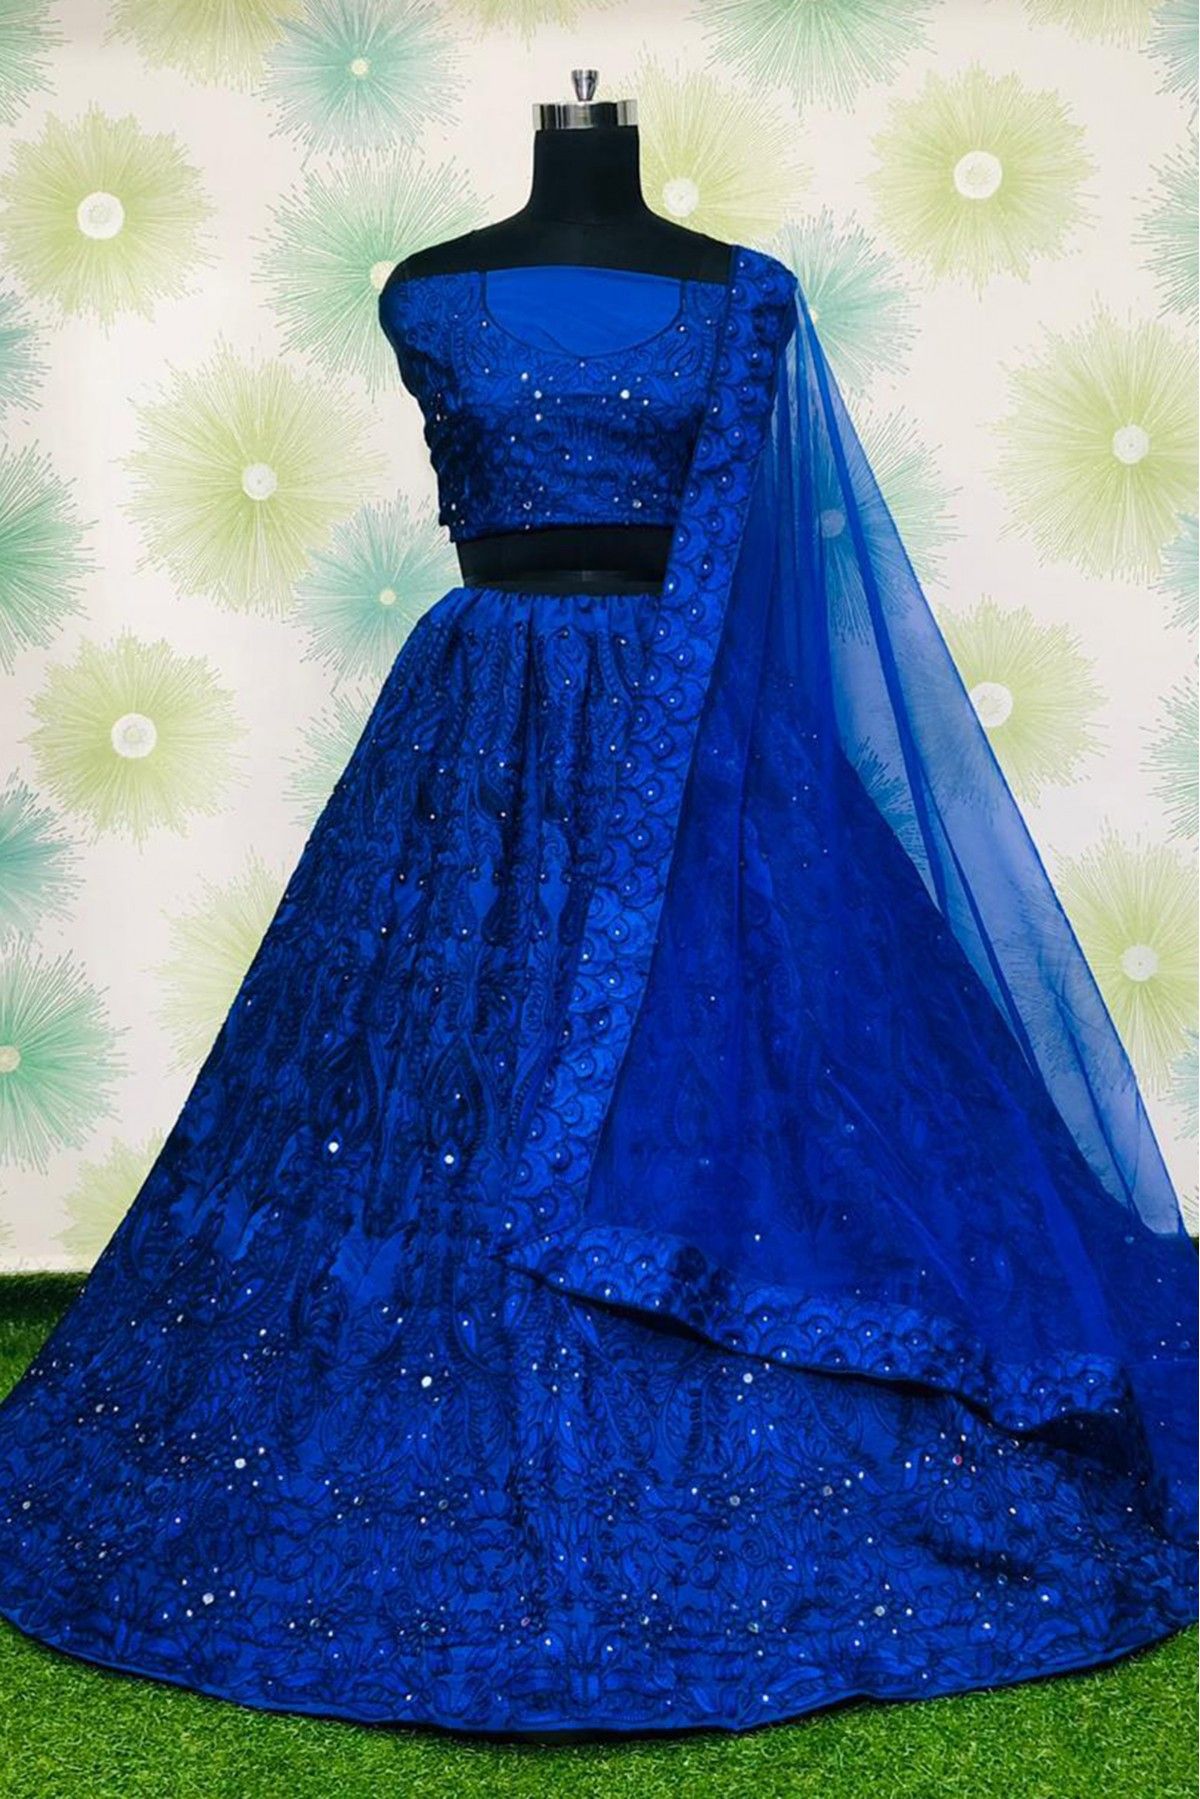 Pearl Work Sky Blue Lehenga Choli Wedding Lengha Skirt Top Sari Dress  Valentine | eBay